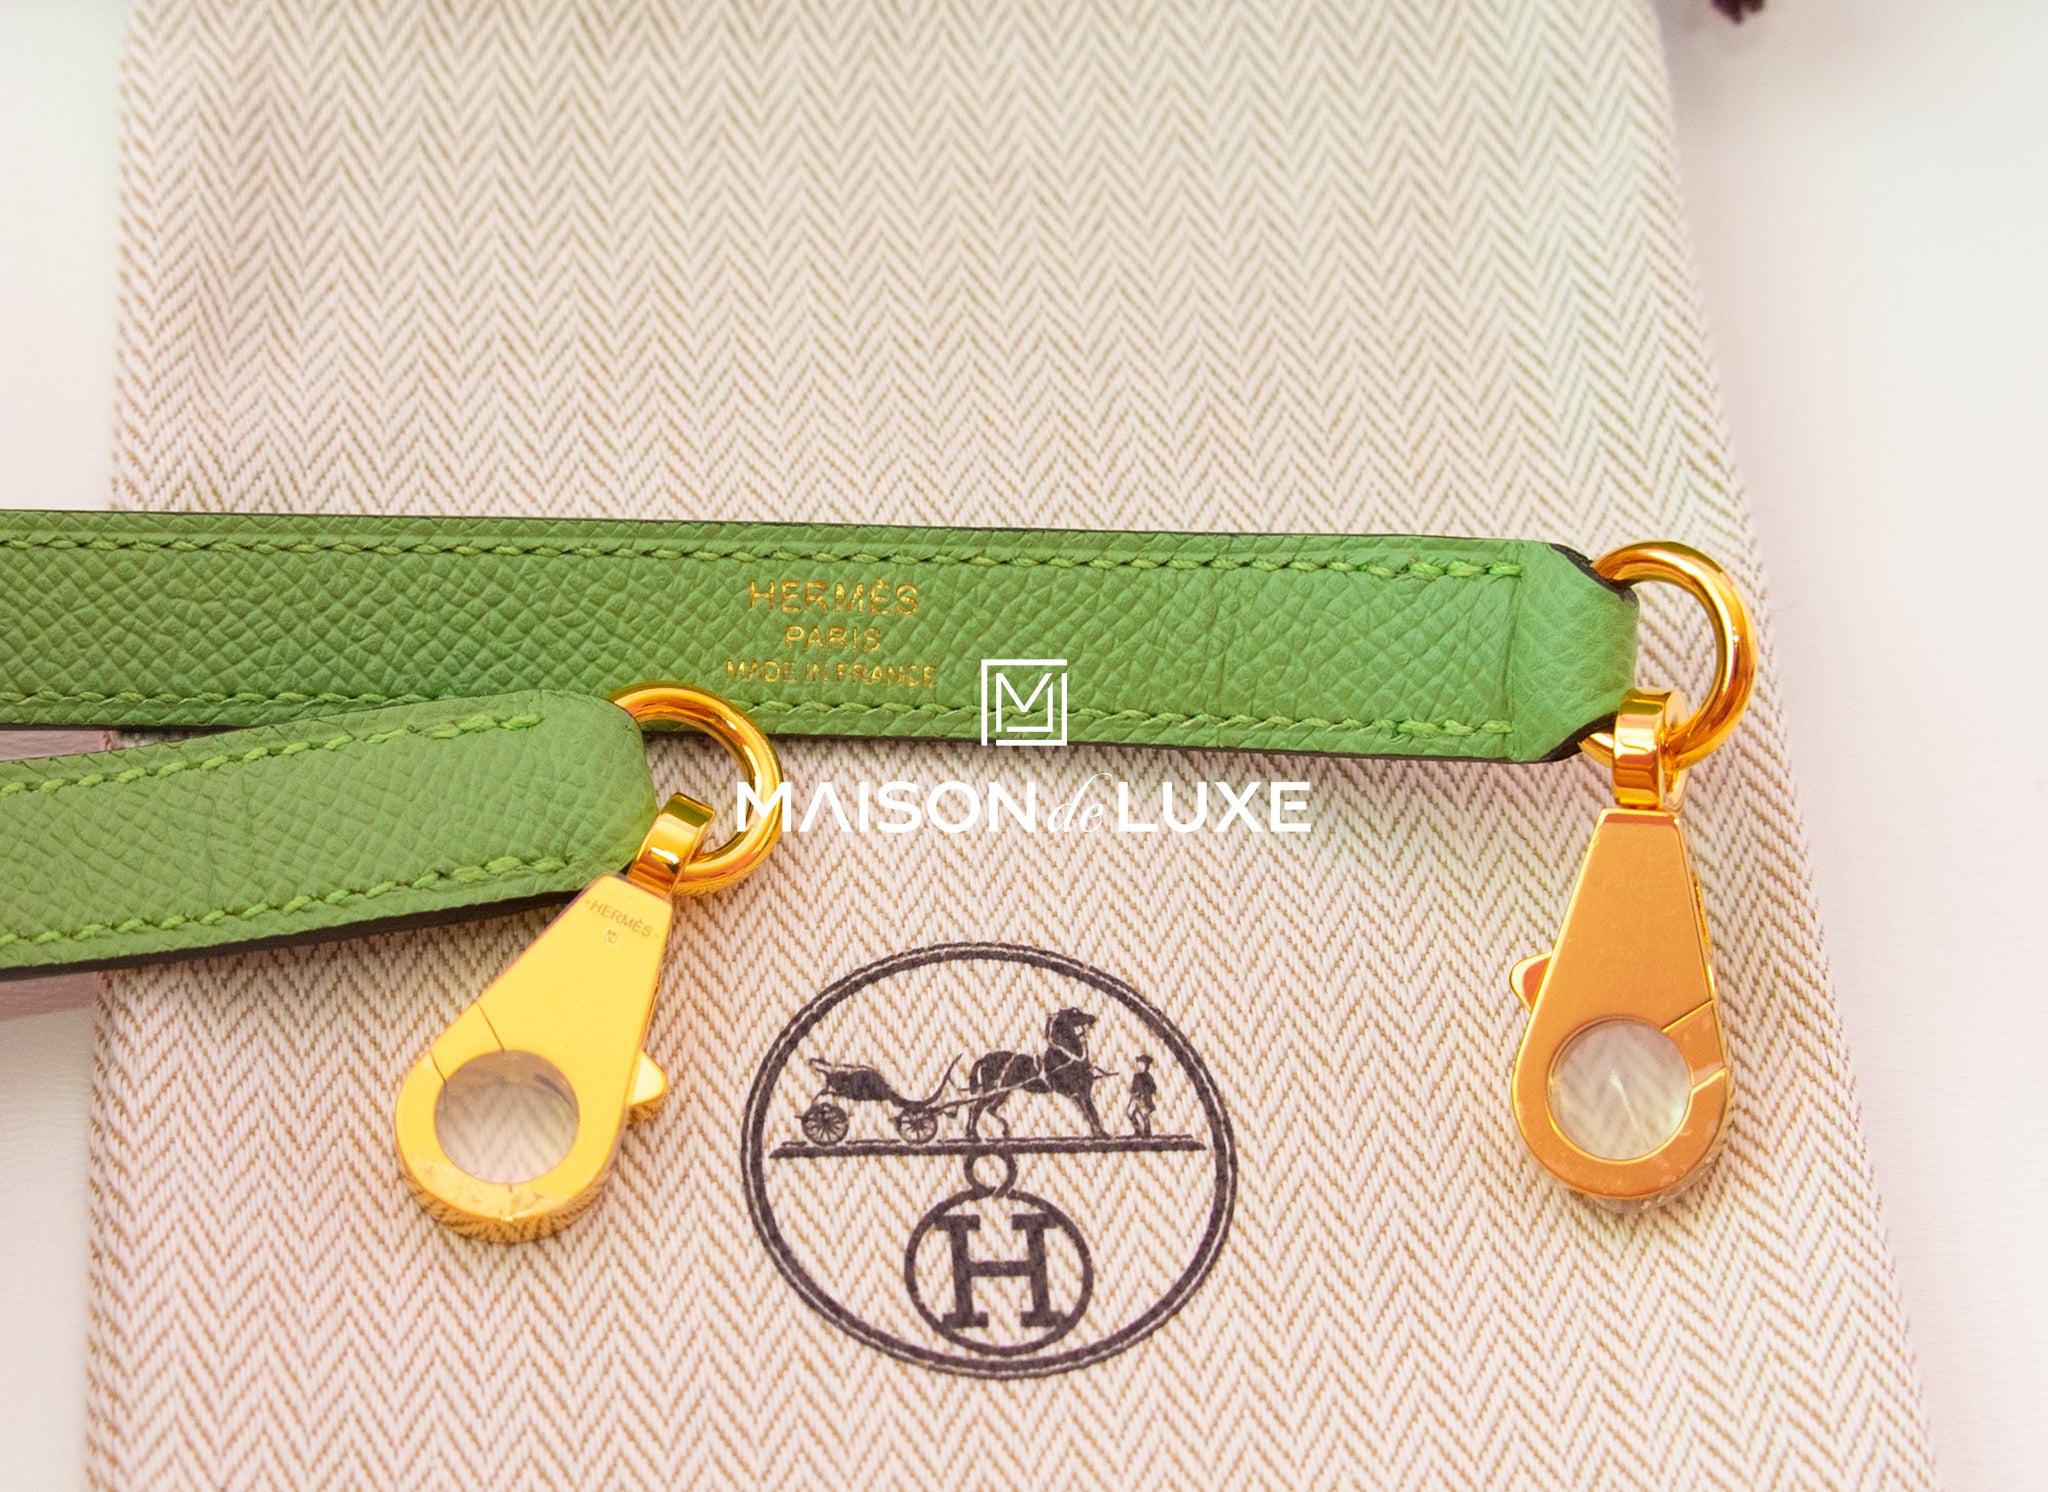 Hermès Vert Criquet Epsom Leather Kelly 28cm Sellier For Sale at 1stDibs